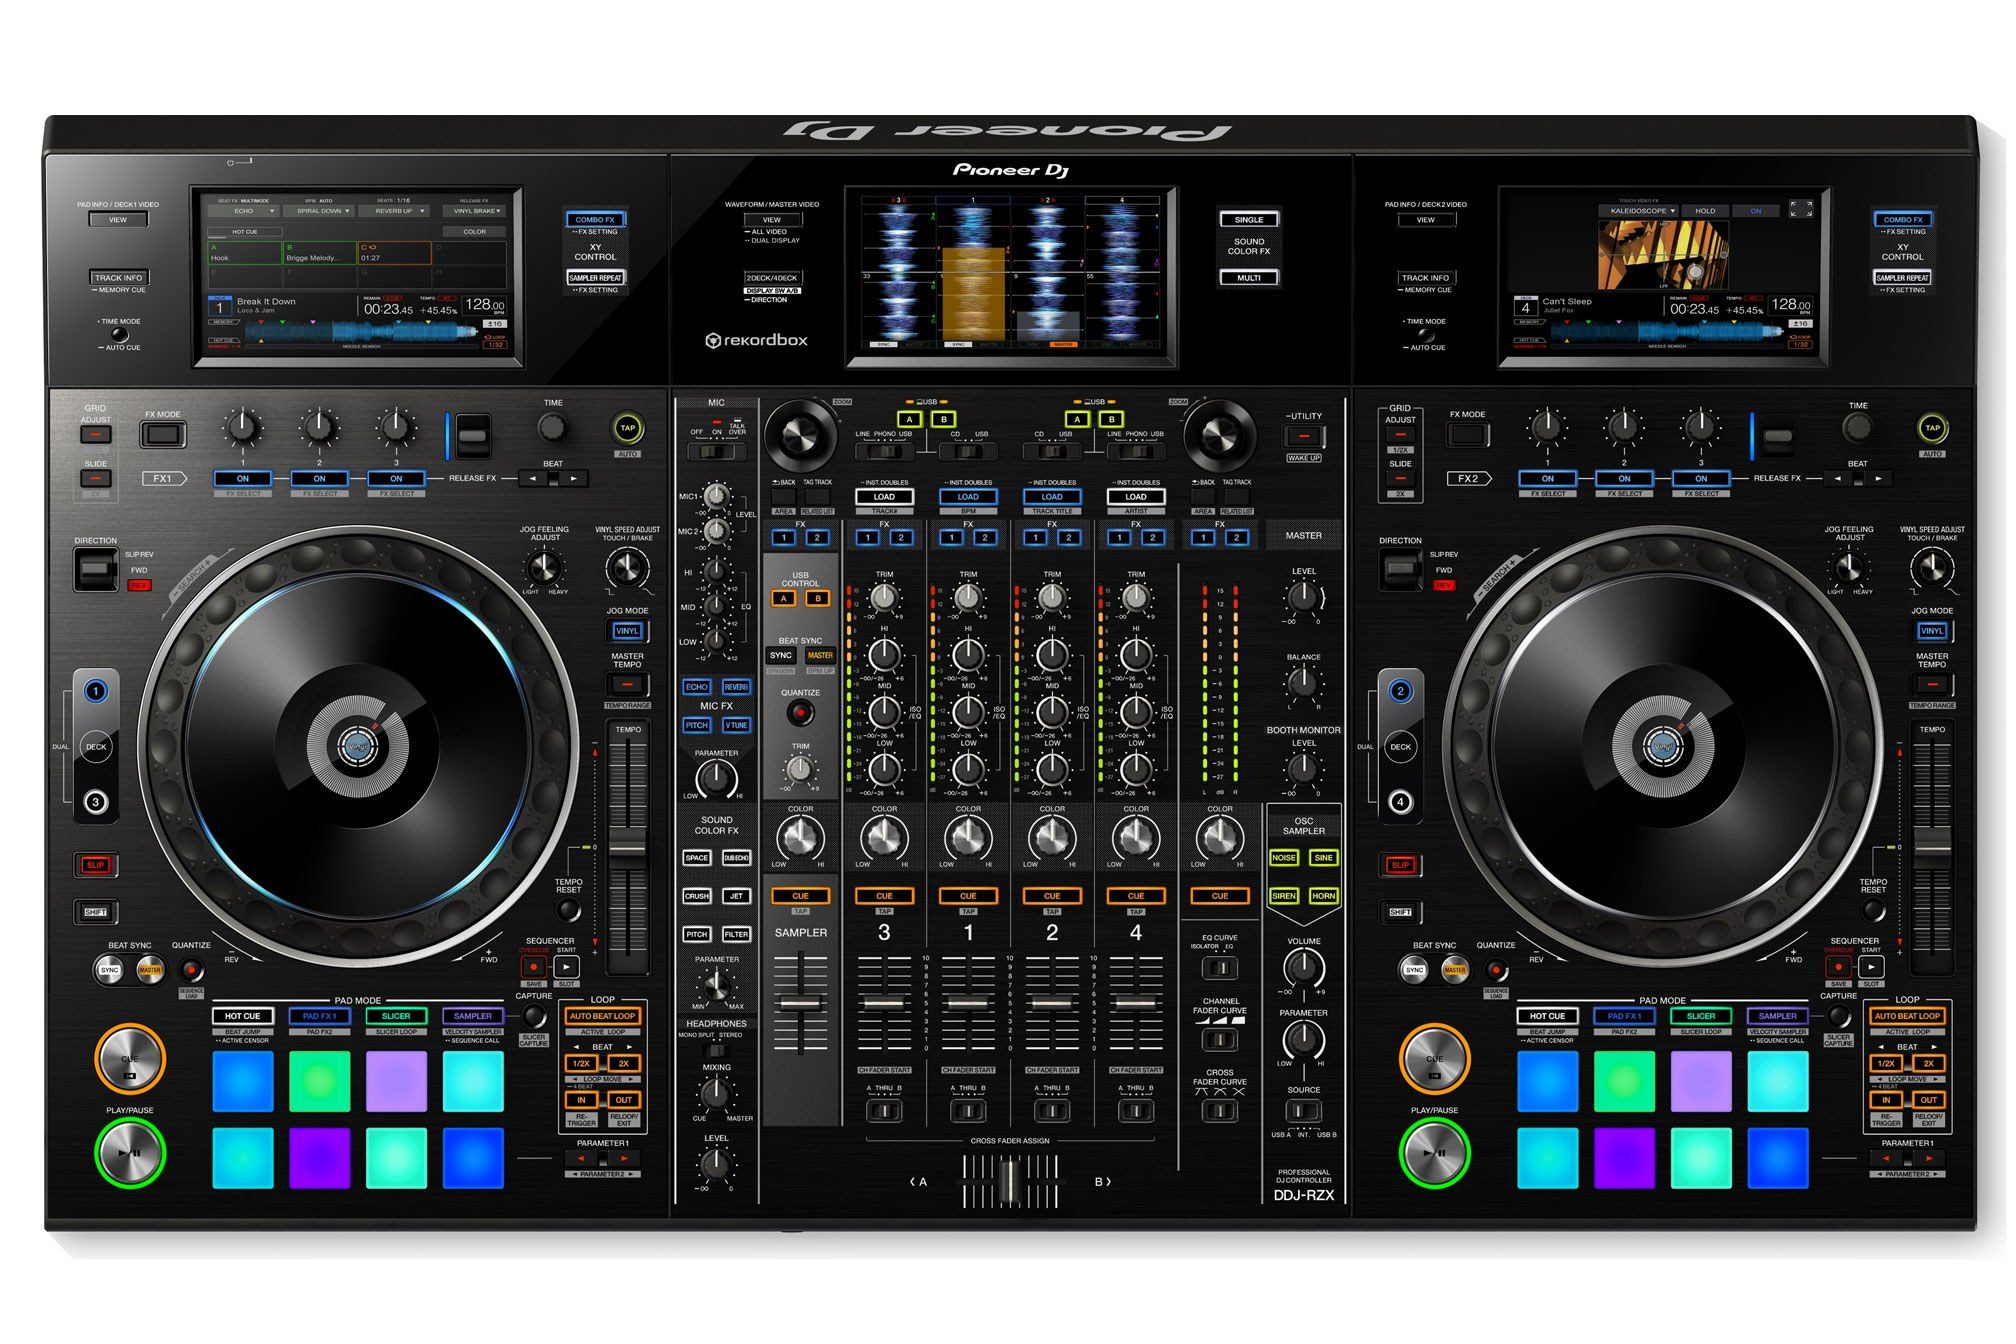 The 11 DJ controllers - Tech - Mixmag